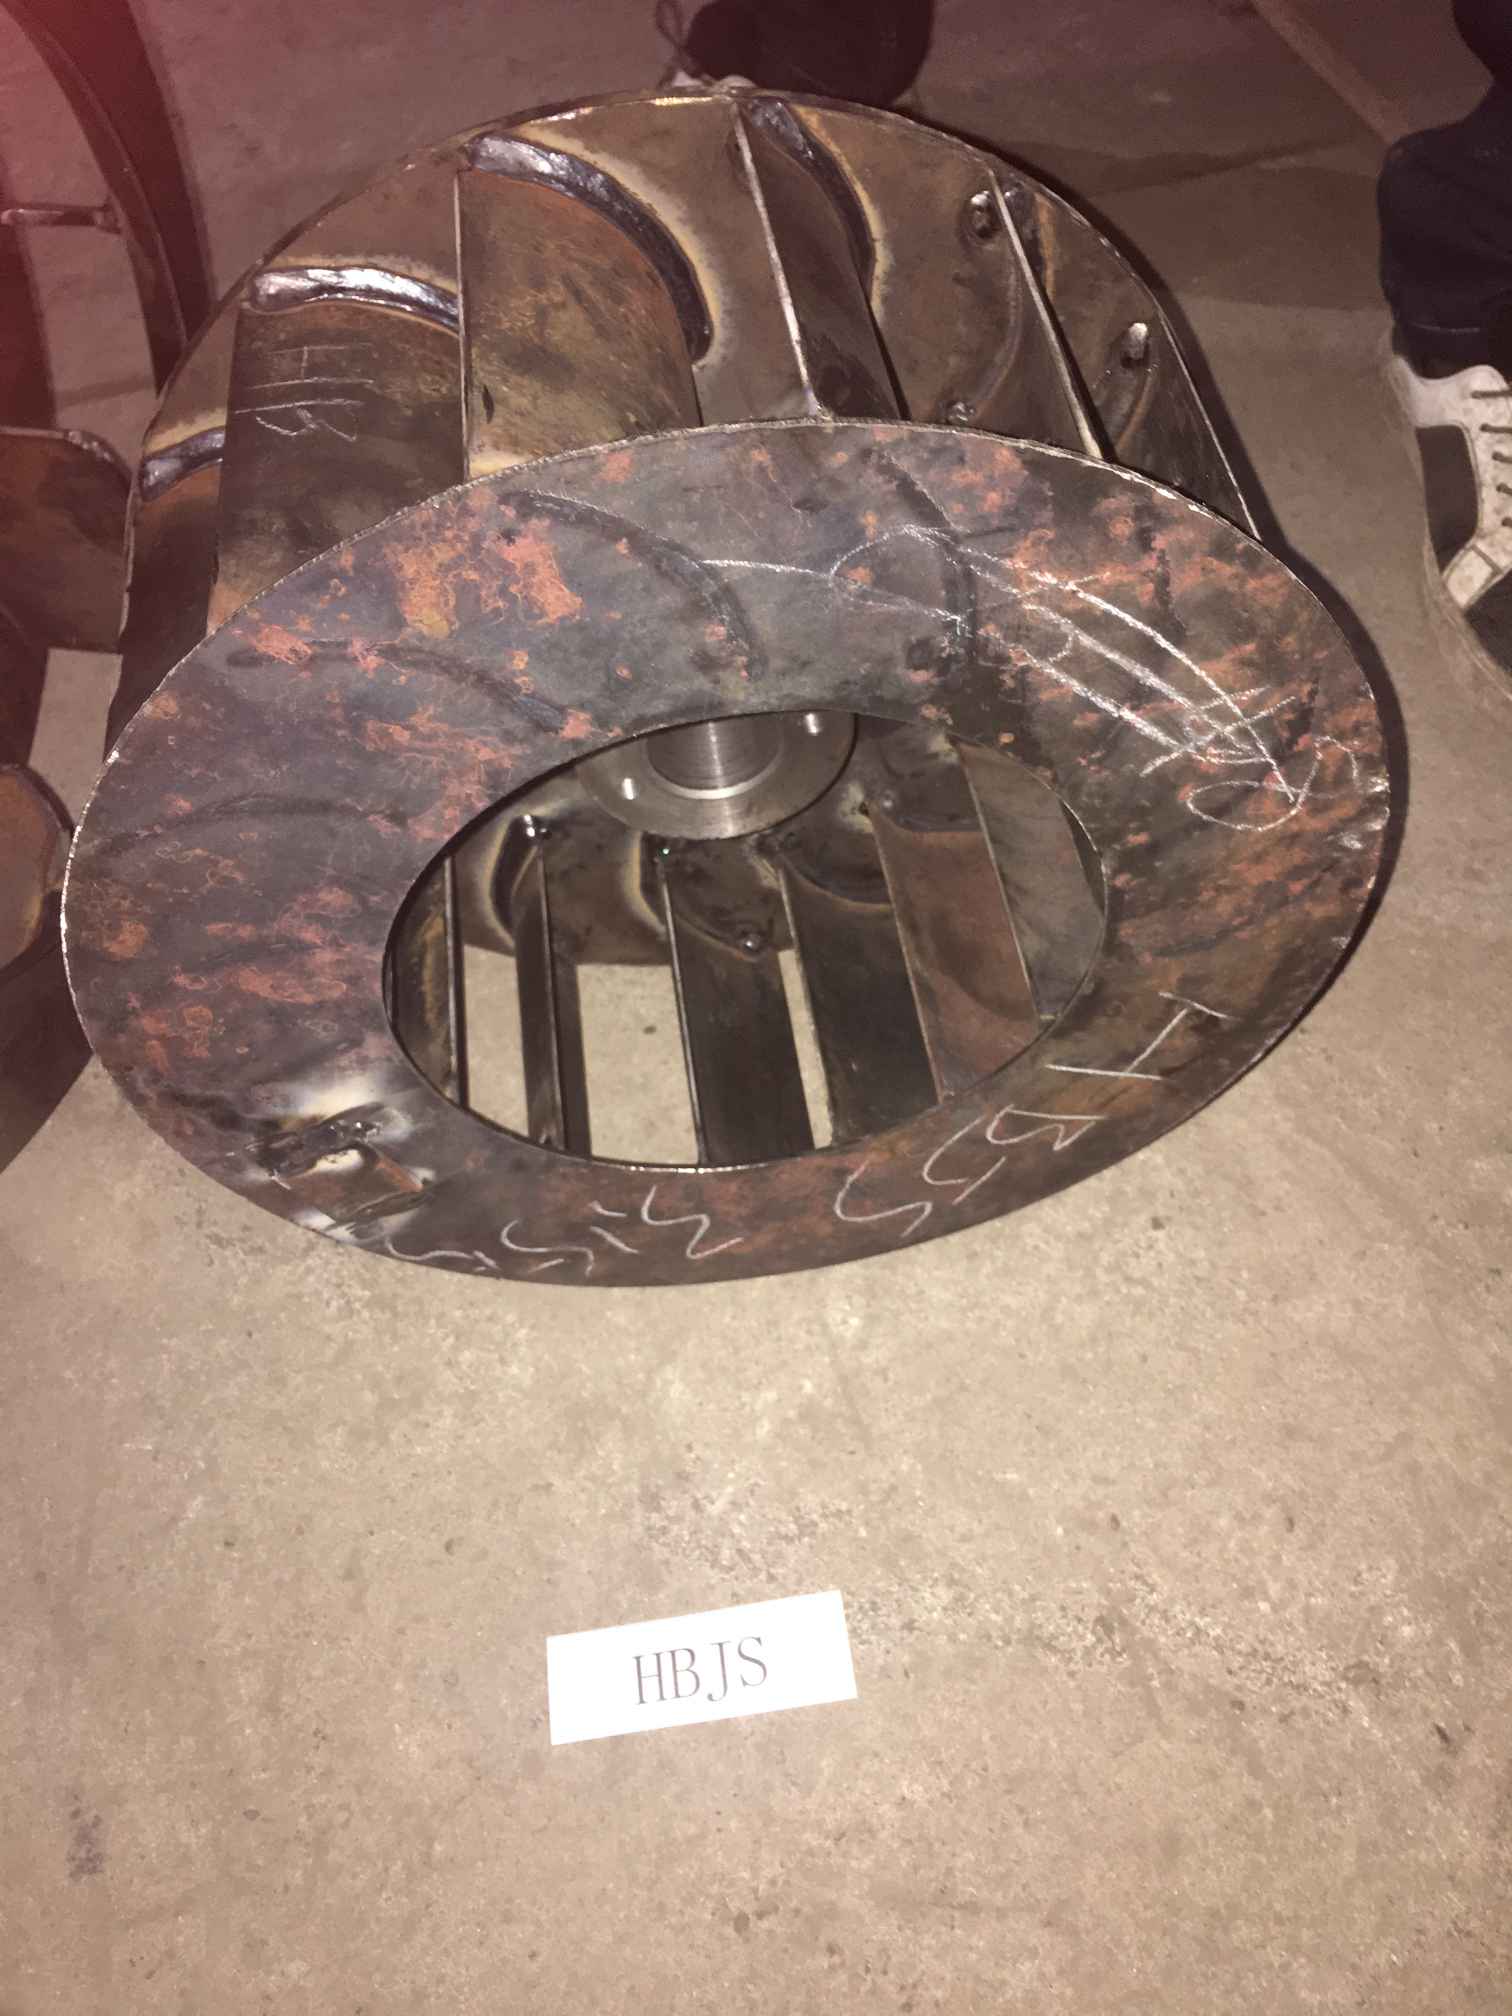 HBJS aluminum alloy centrifugal fan